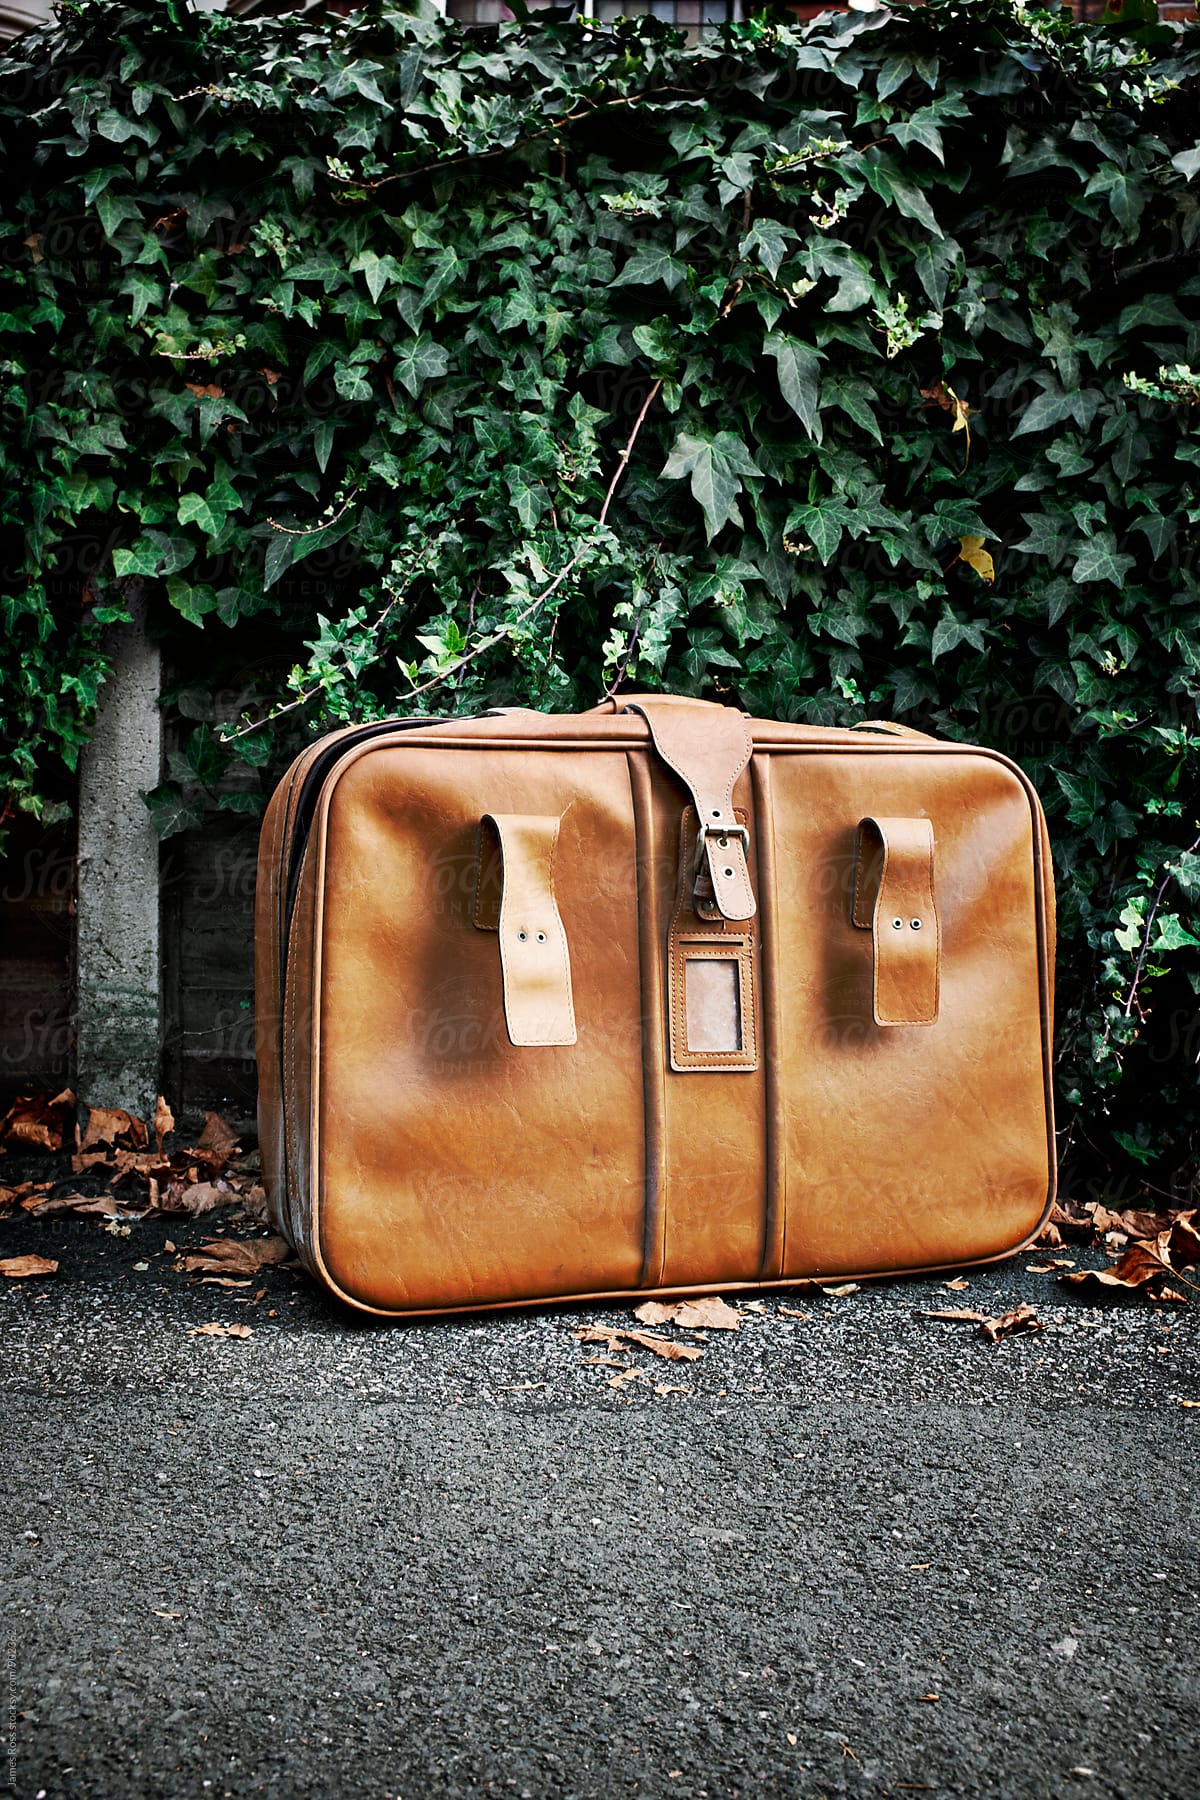 A tan leather suitcase